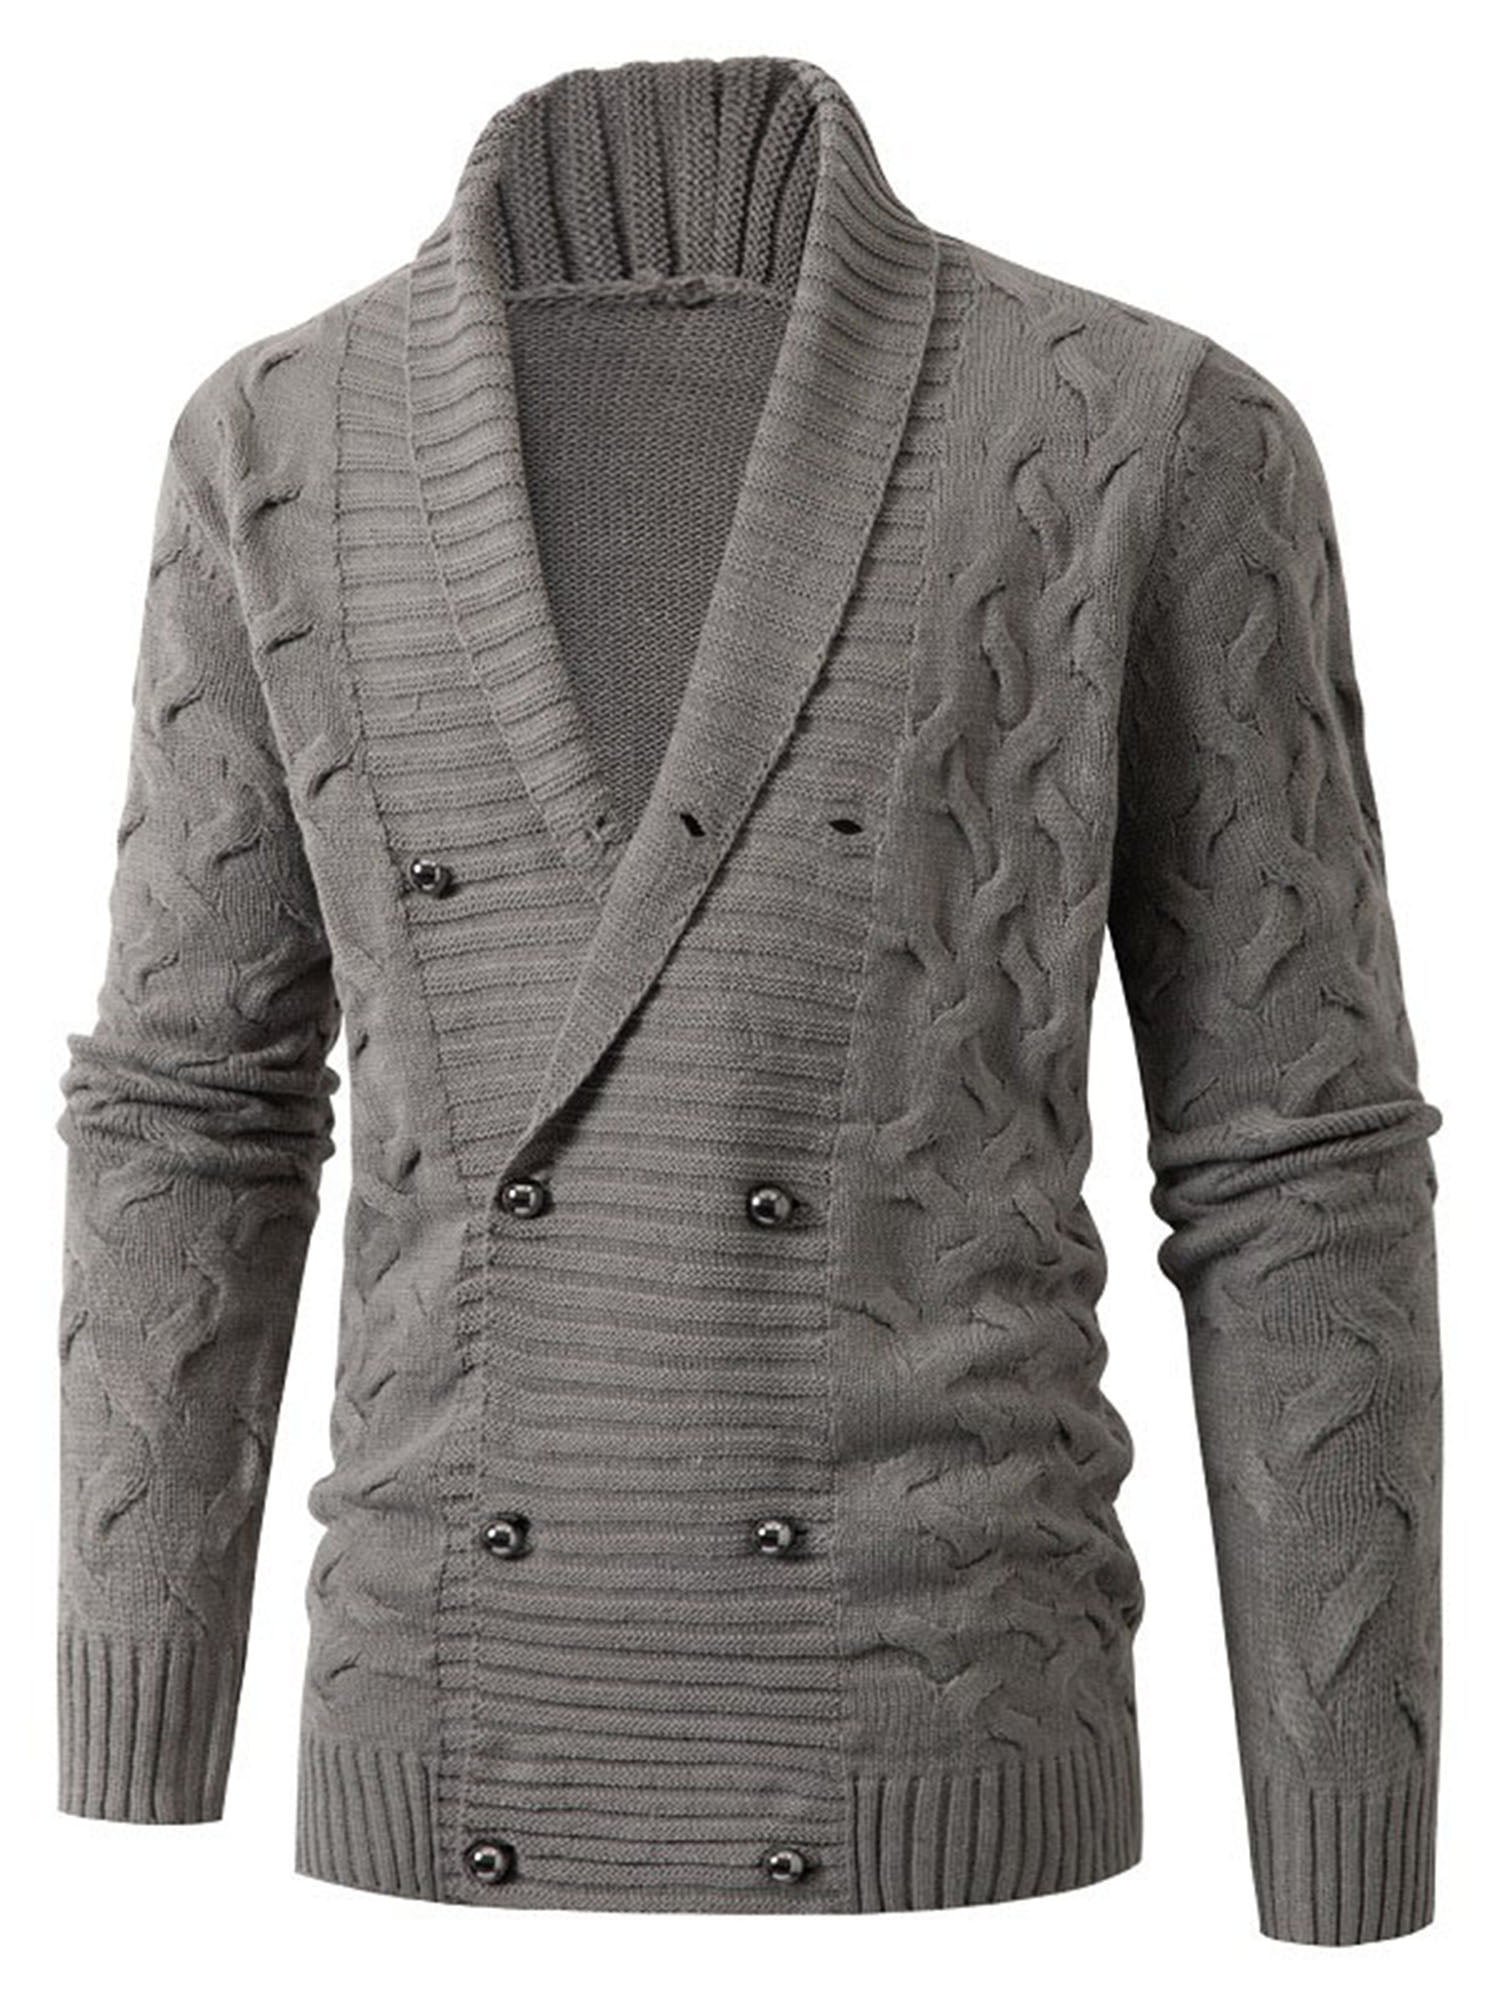 Men's Long Sleeve Knitted Sweater Cardigan Casual Slim Fit Knitwear Coat Tops